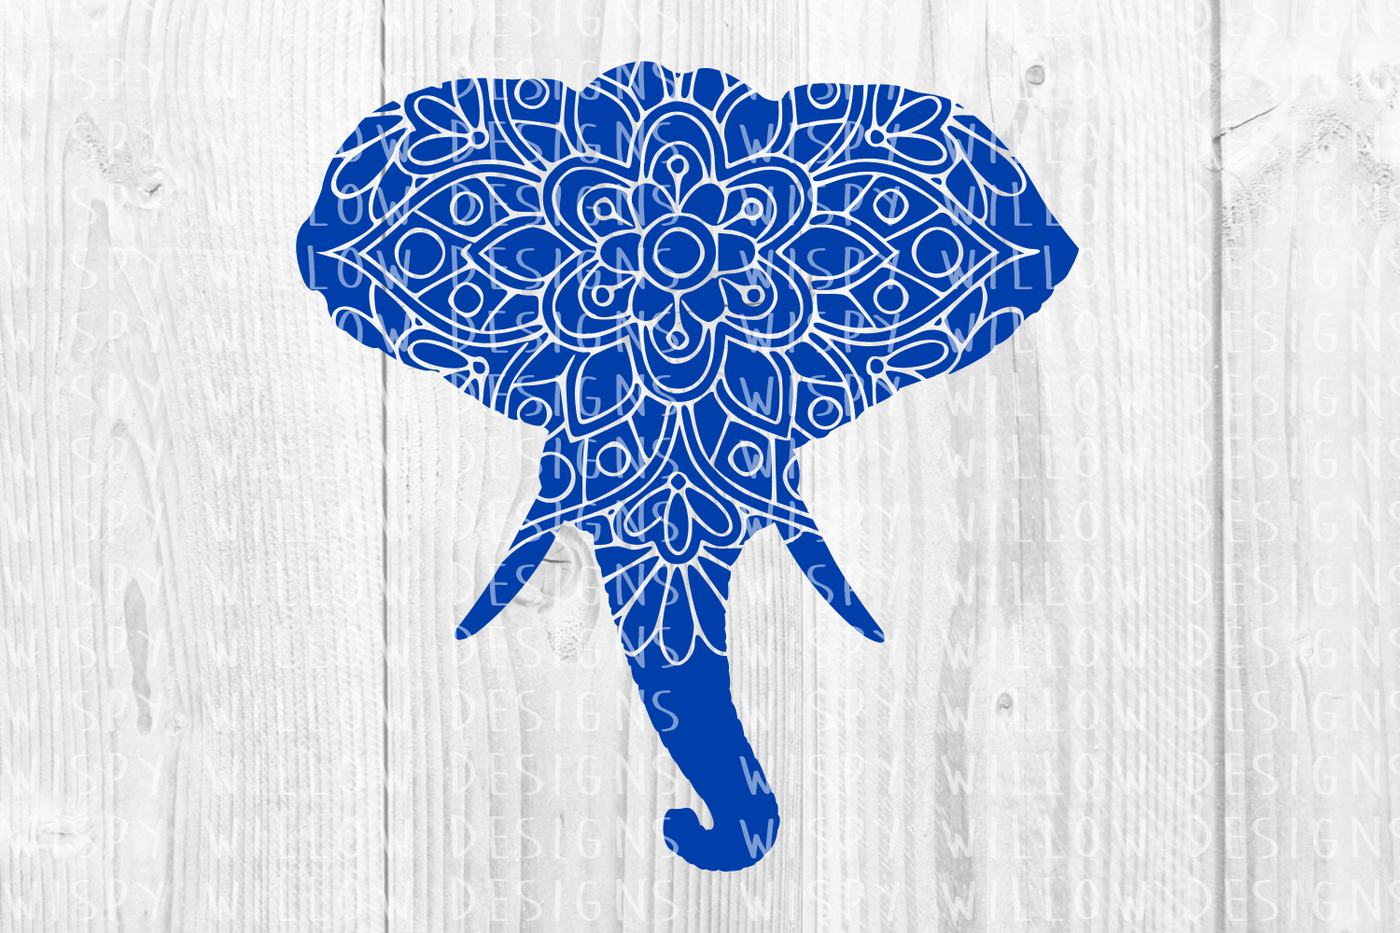 Download Elephant Mandala Animal Svg Dxf Eps Png Jpg Pdf By Wispy Willow Designs Thehungryjpeg Com